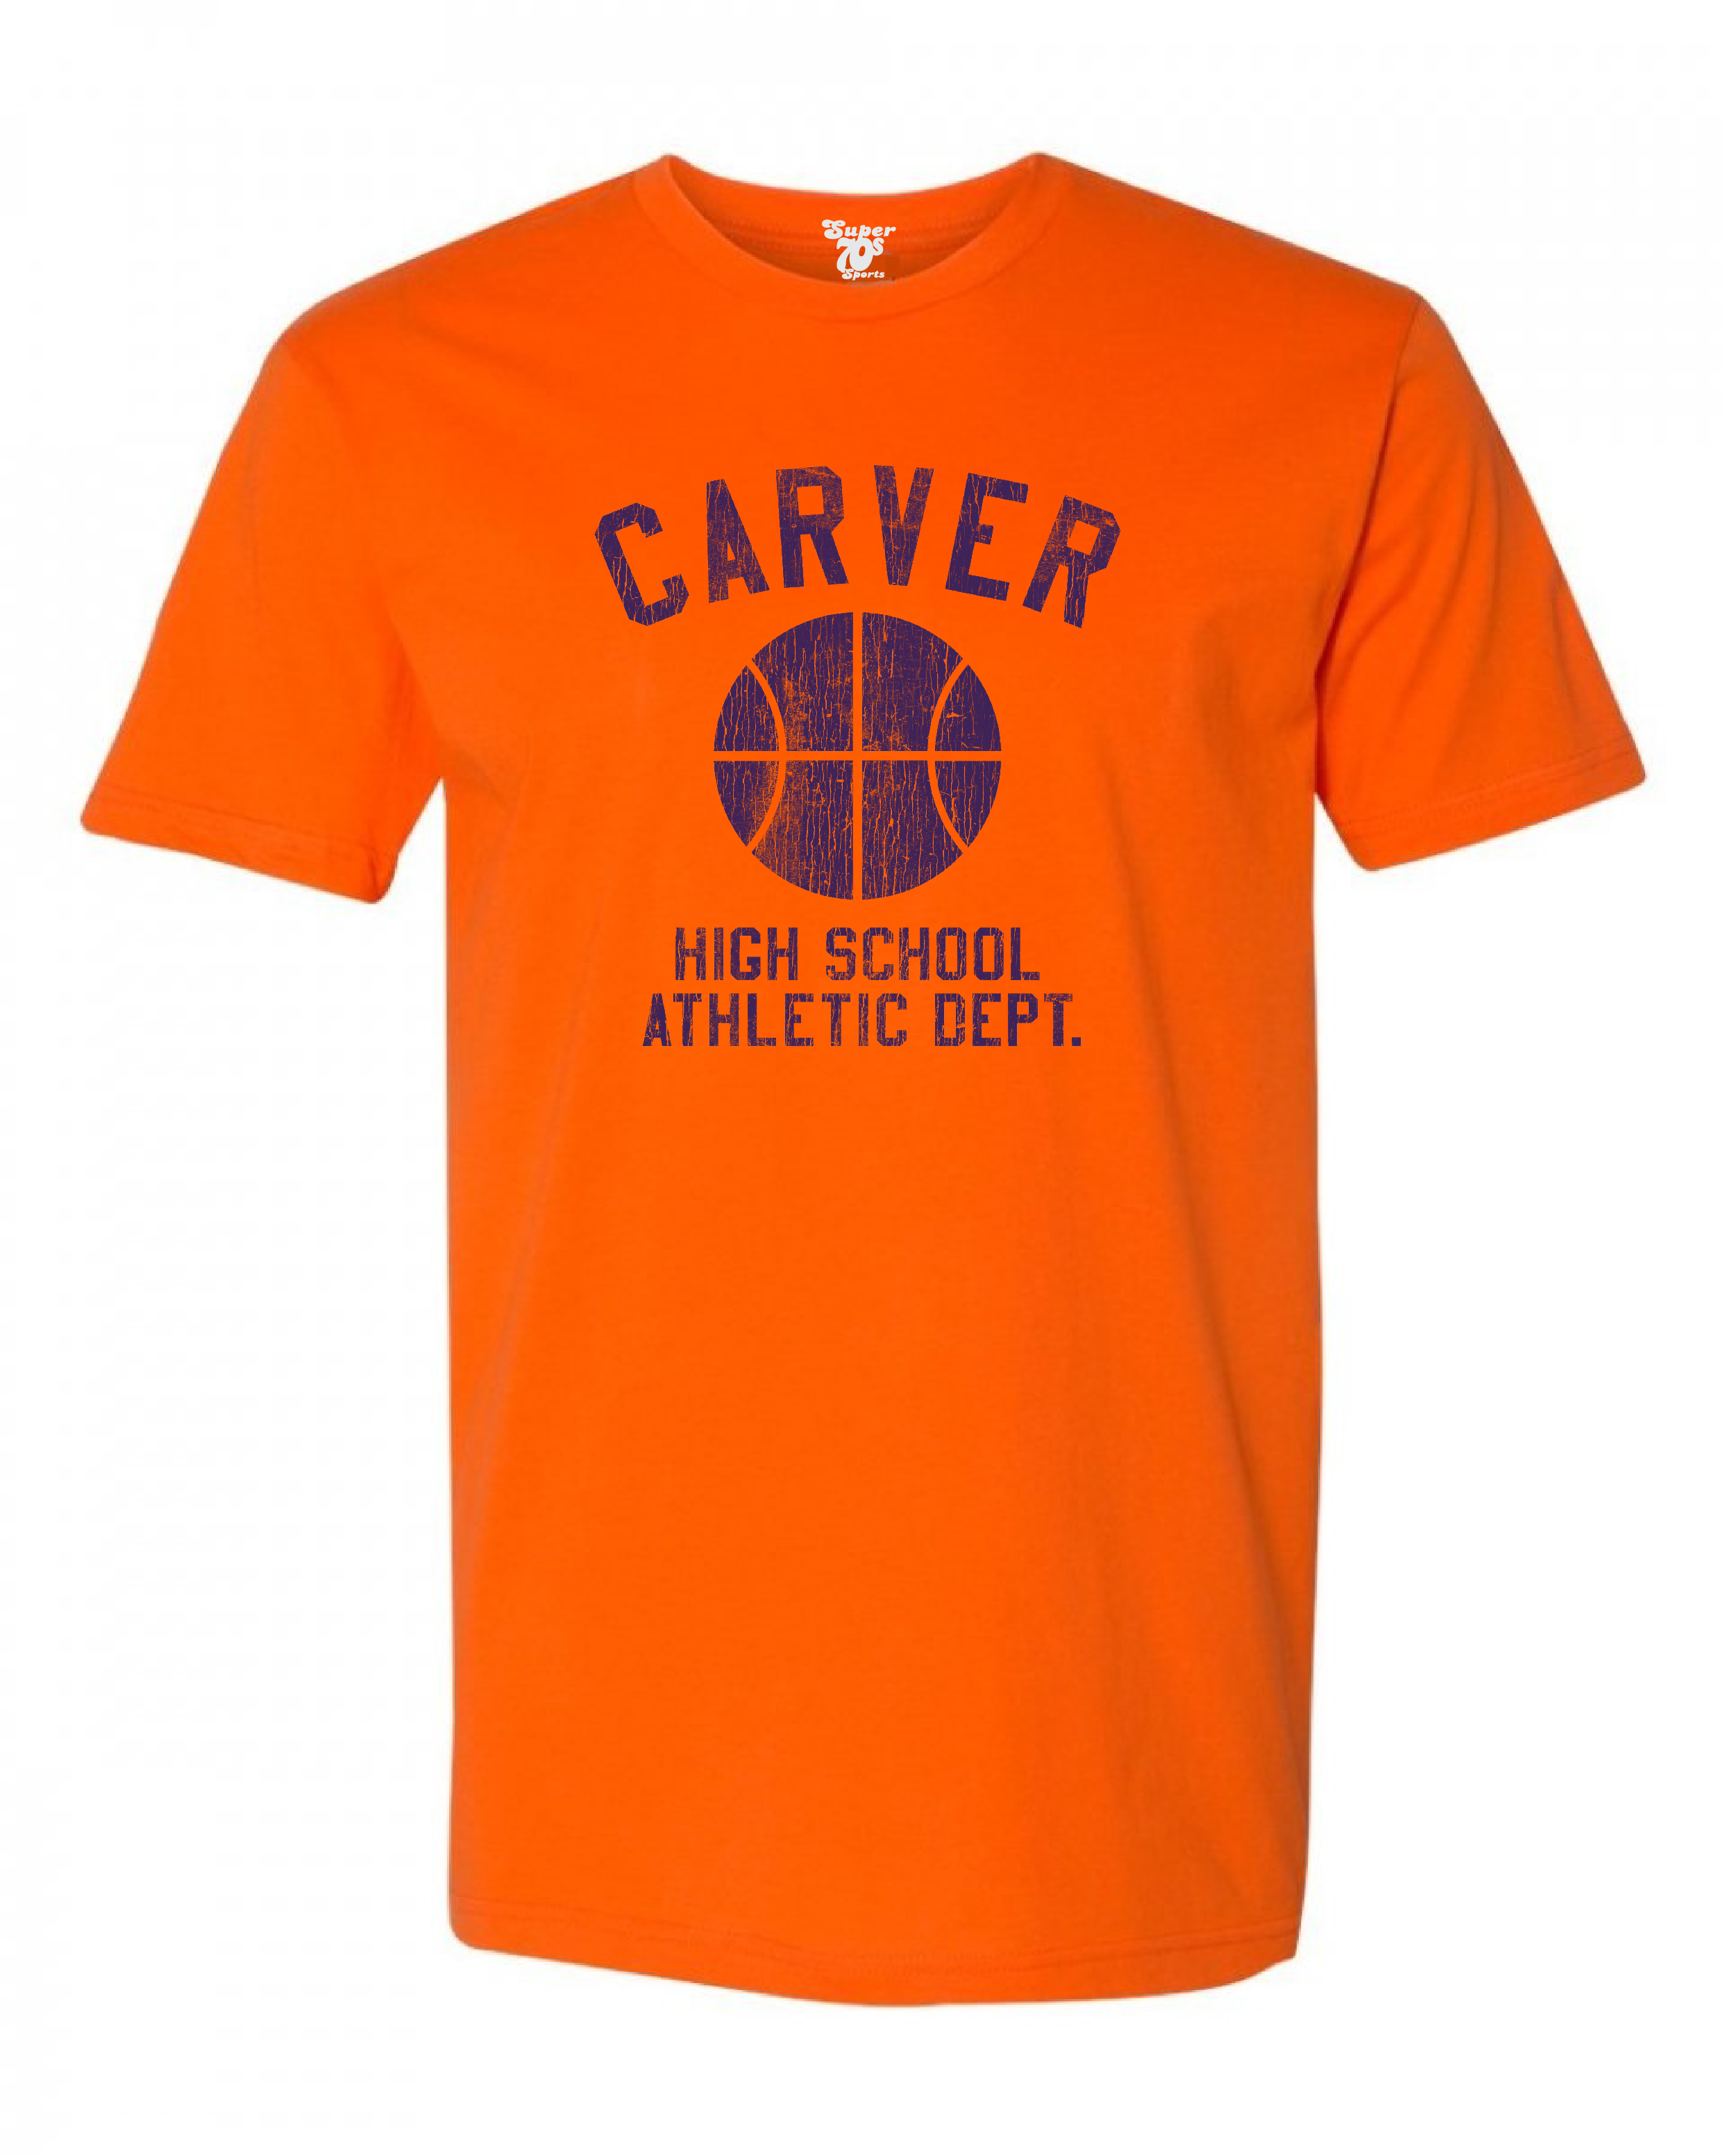 Carver High School Tee – Super 70s Sports